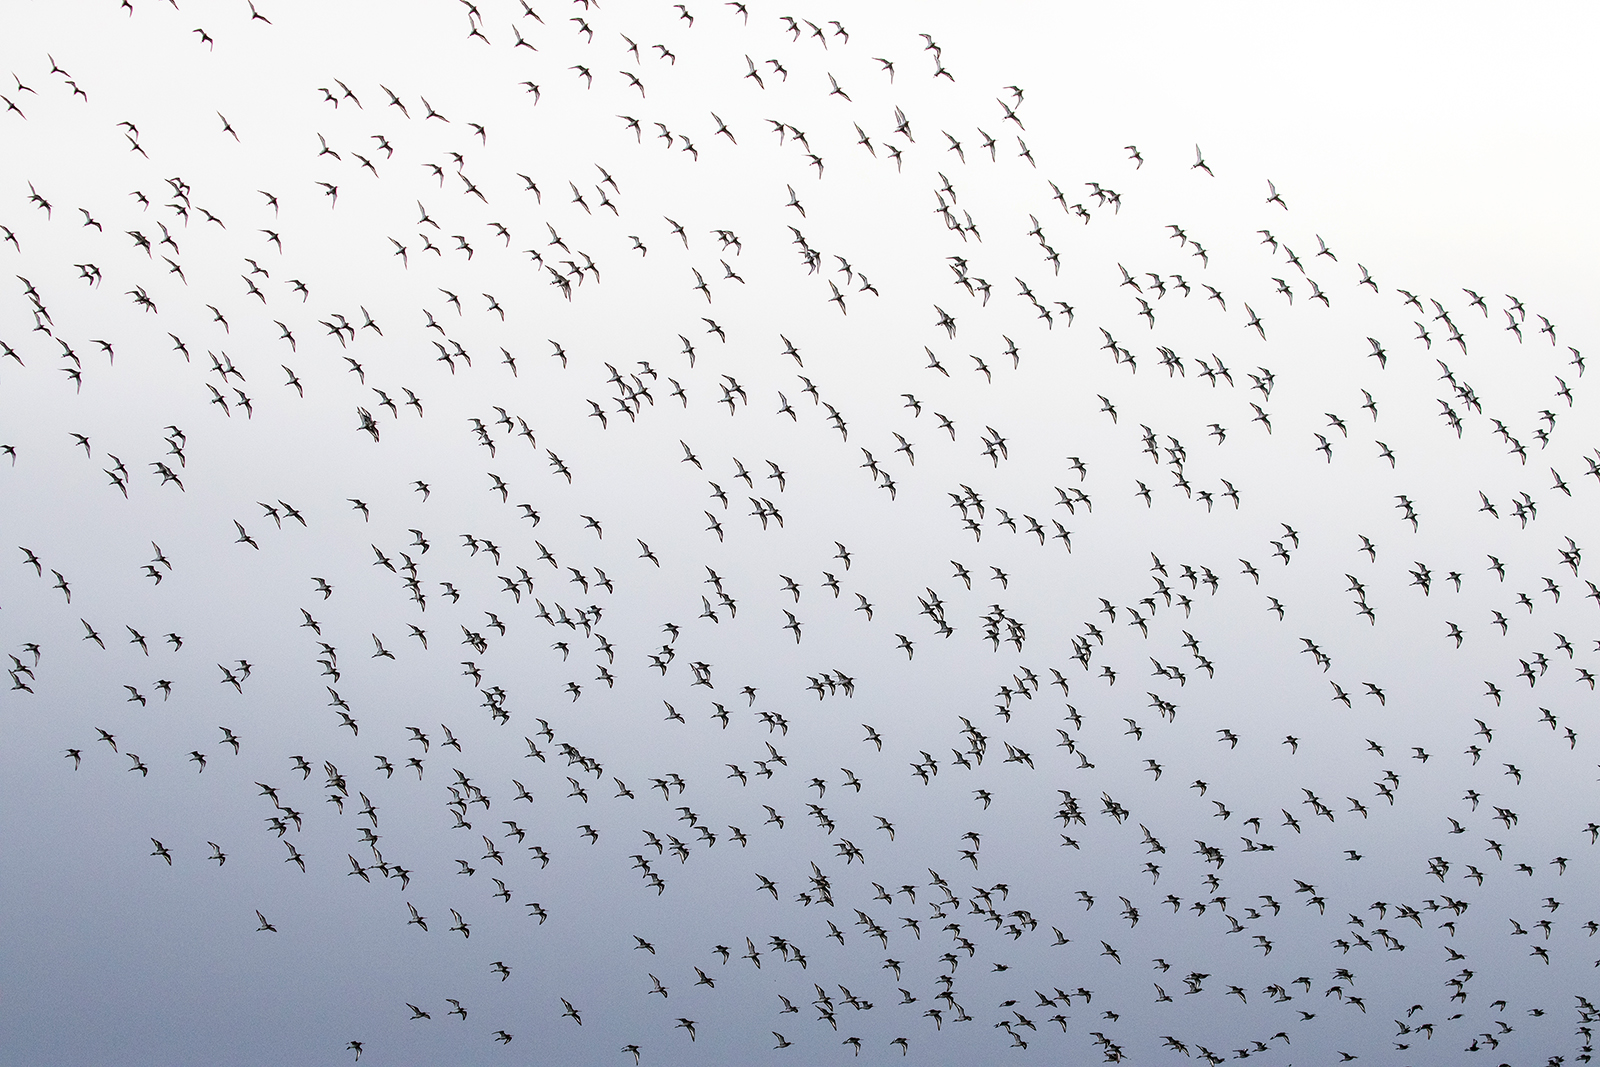 Marshside 1 Black-tailedGodwit  flock (1042K)